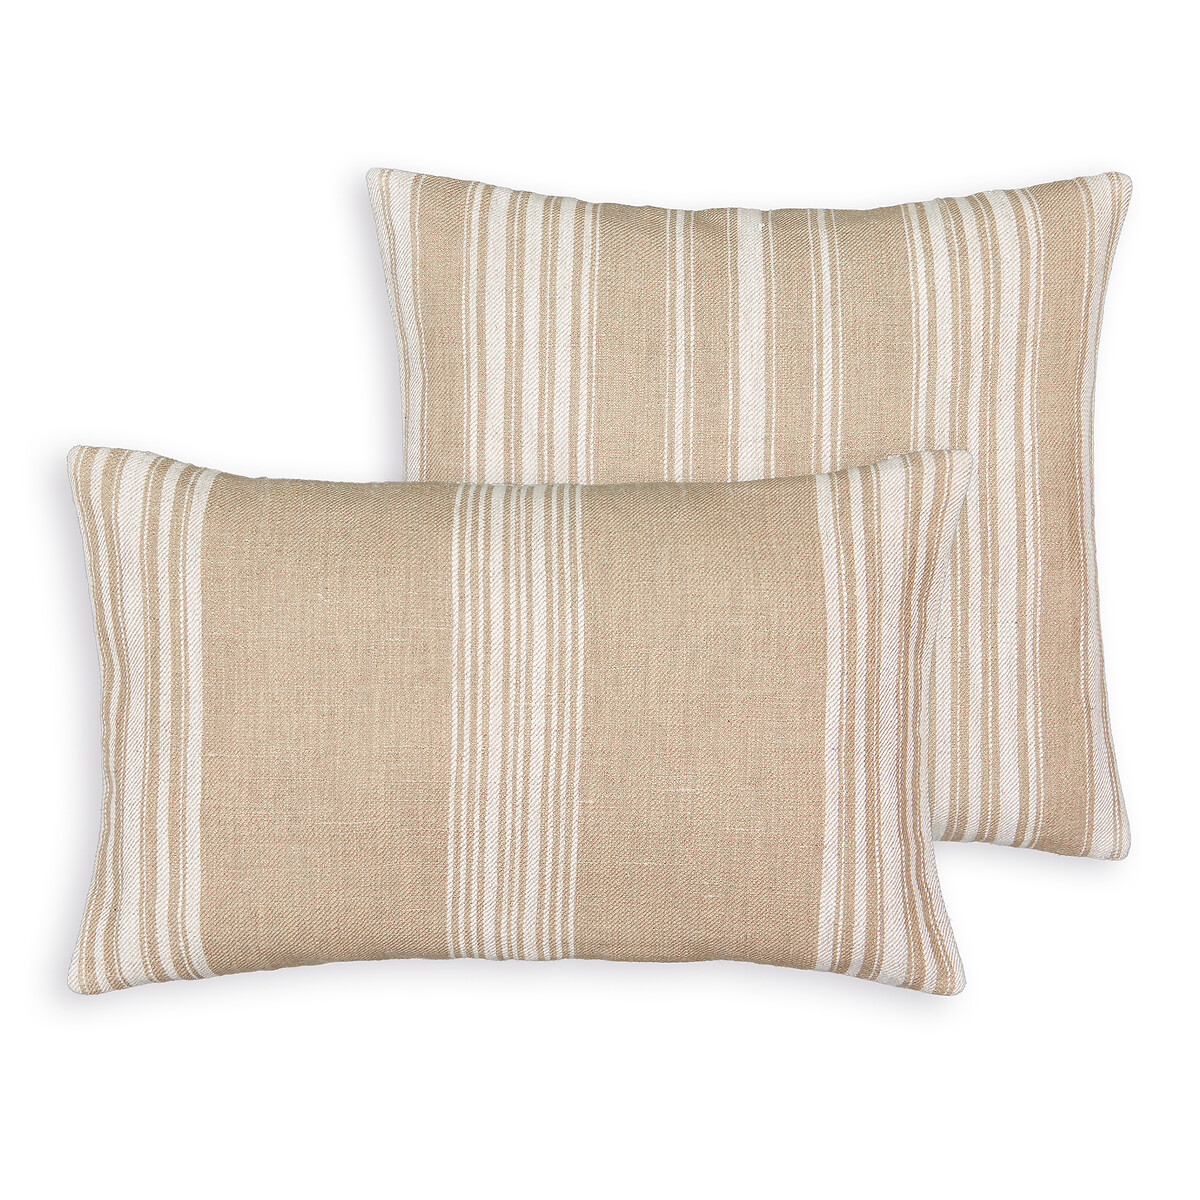 Belaga Striped Square Cotton / Linen Cushion Cover